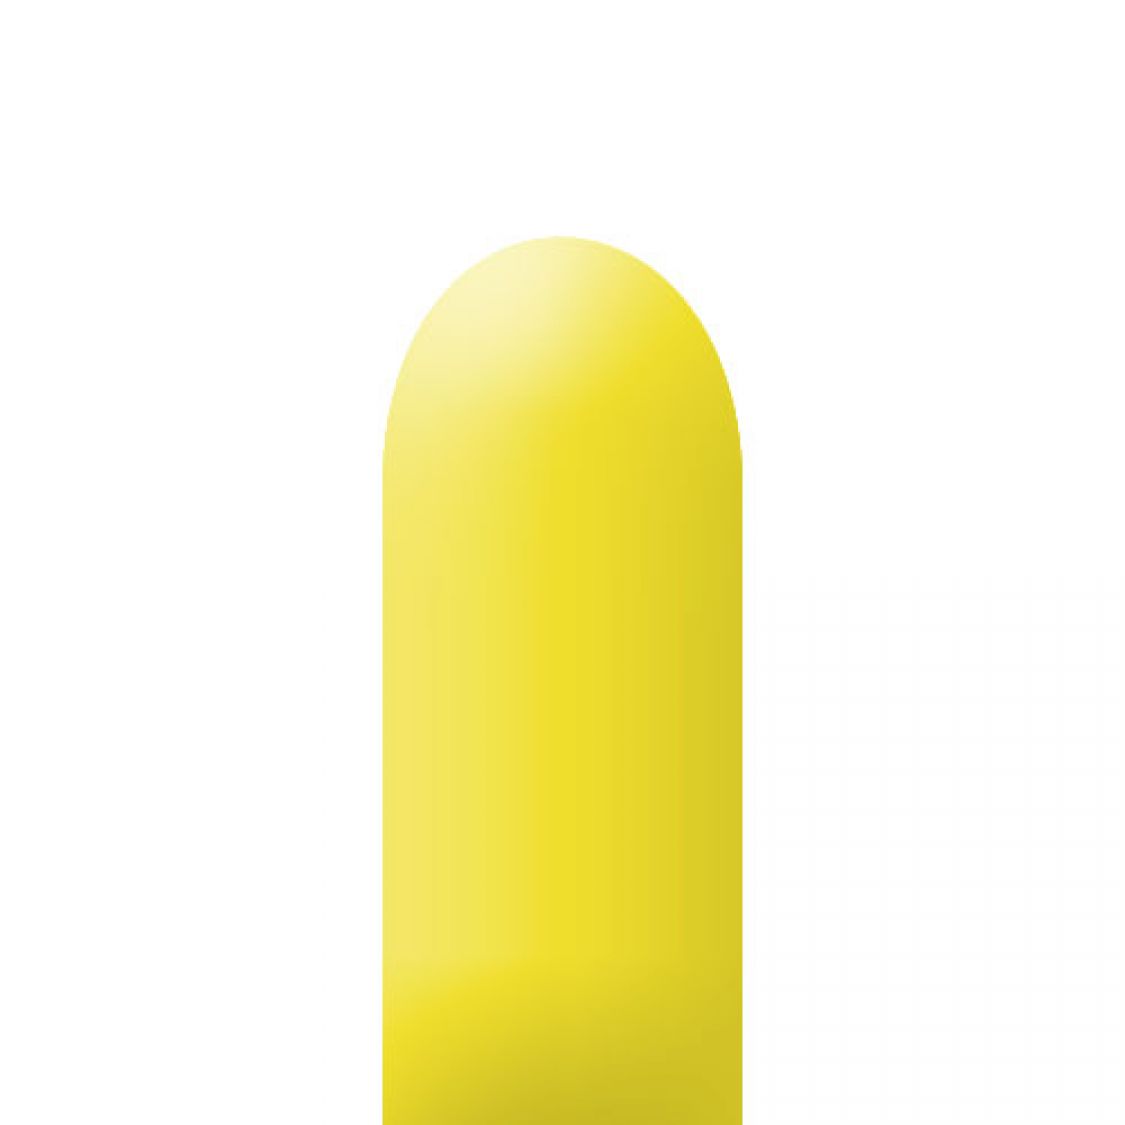 Ballons à Sculpter Jaune Citron (Citrine Yellow)